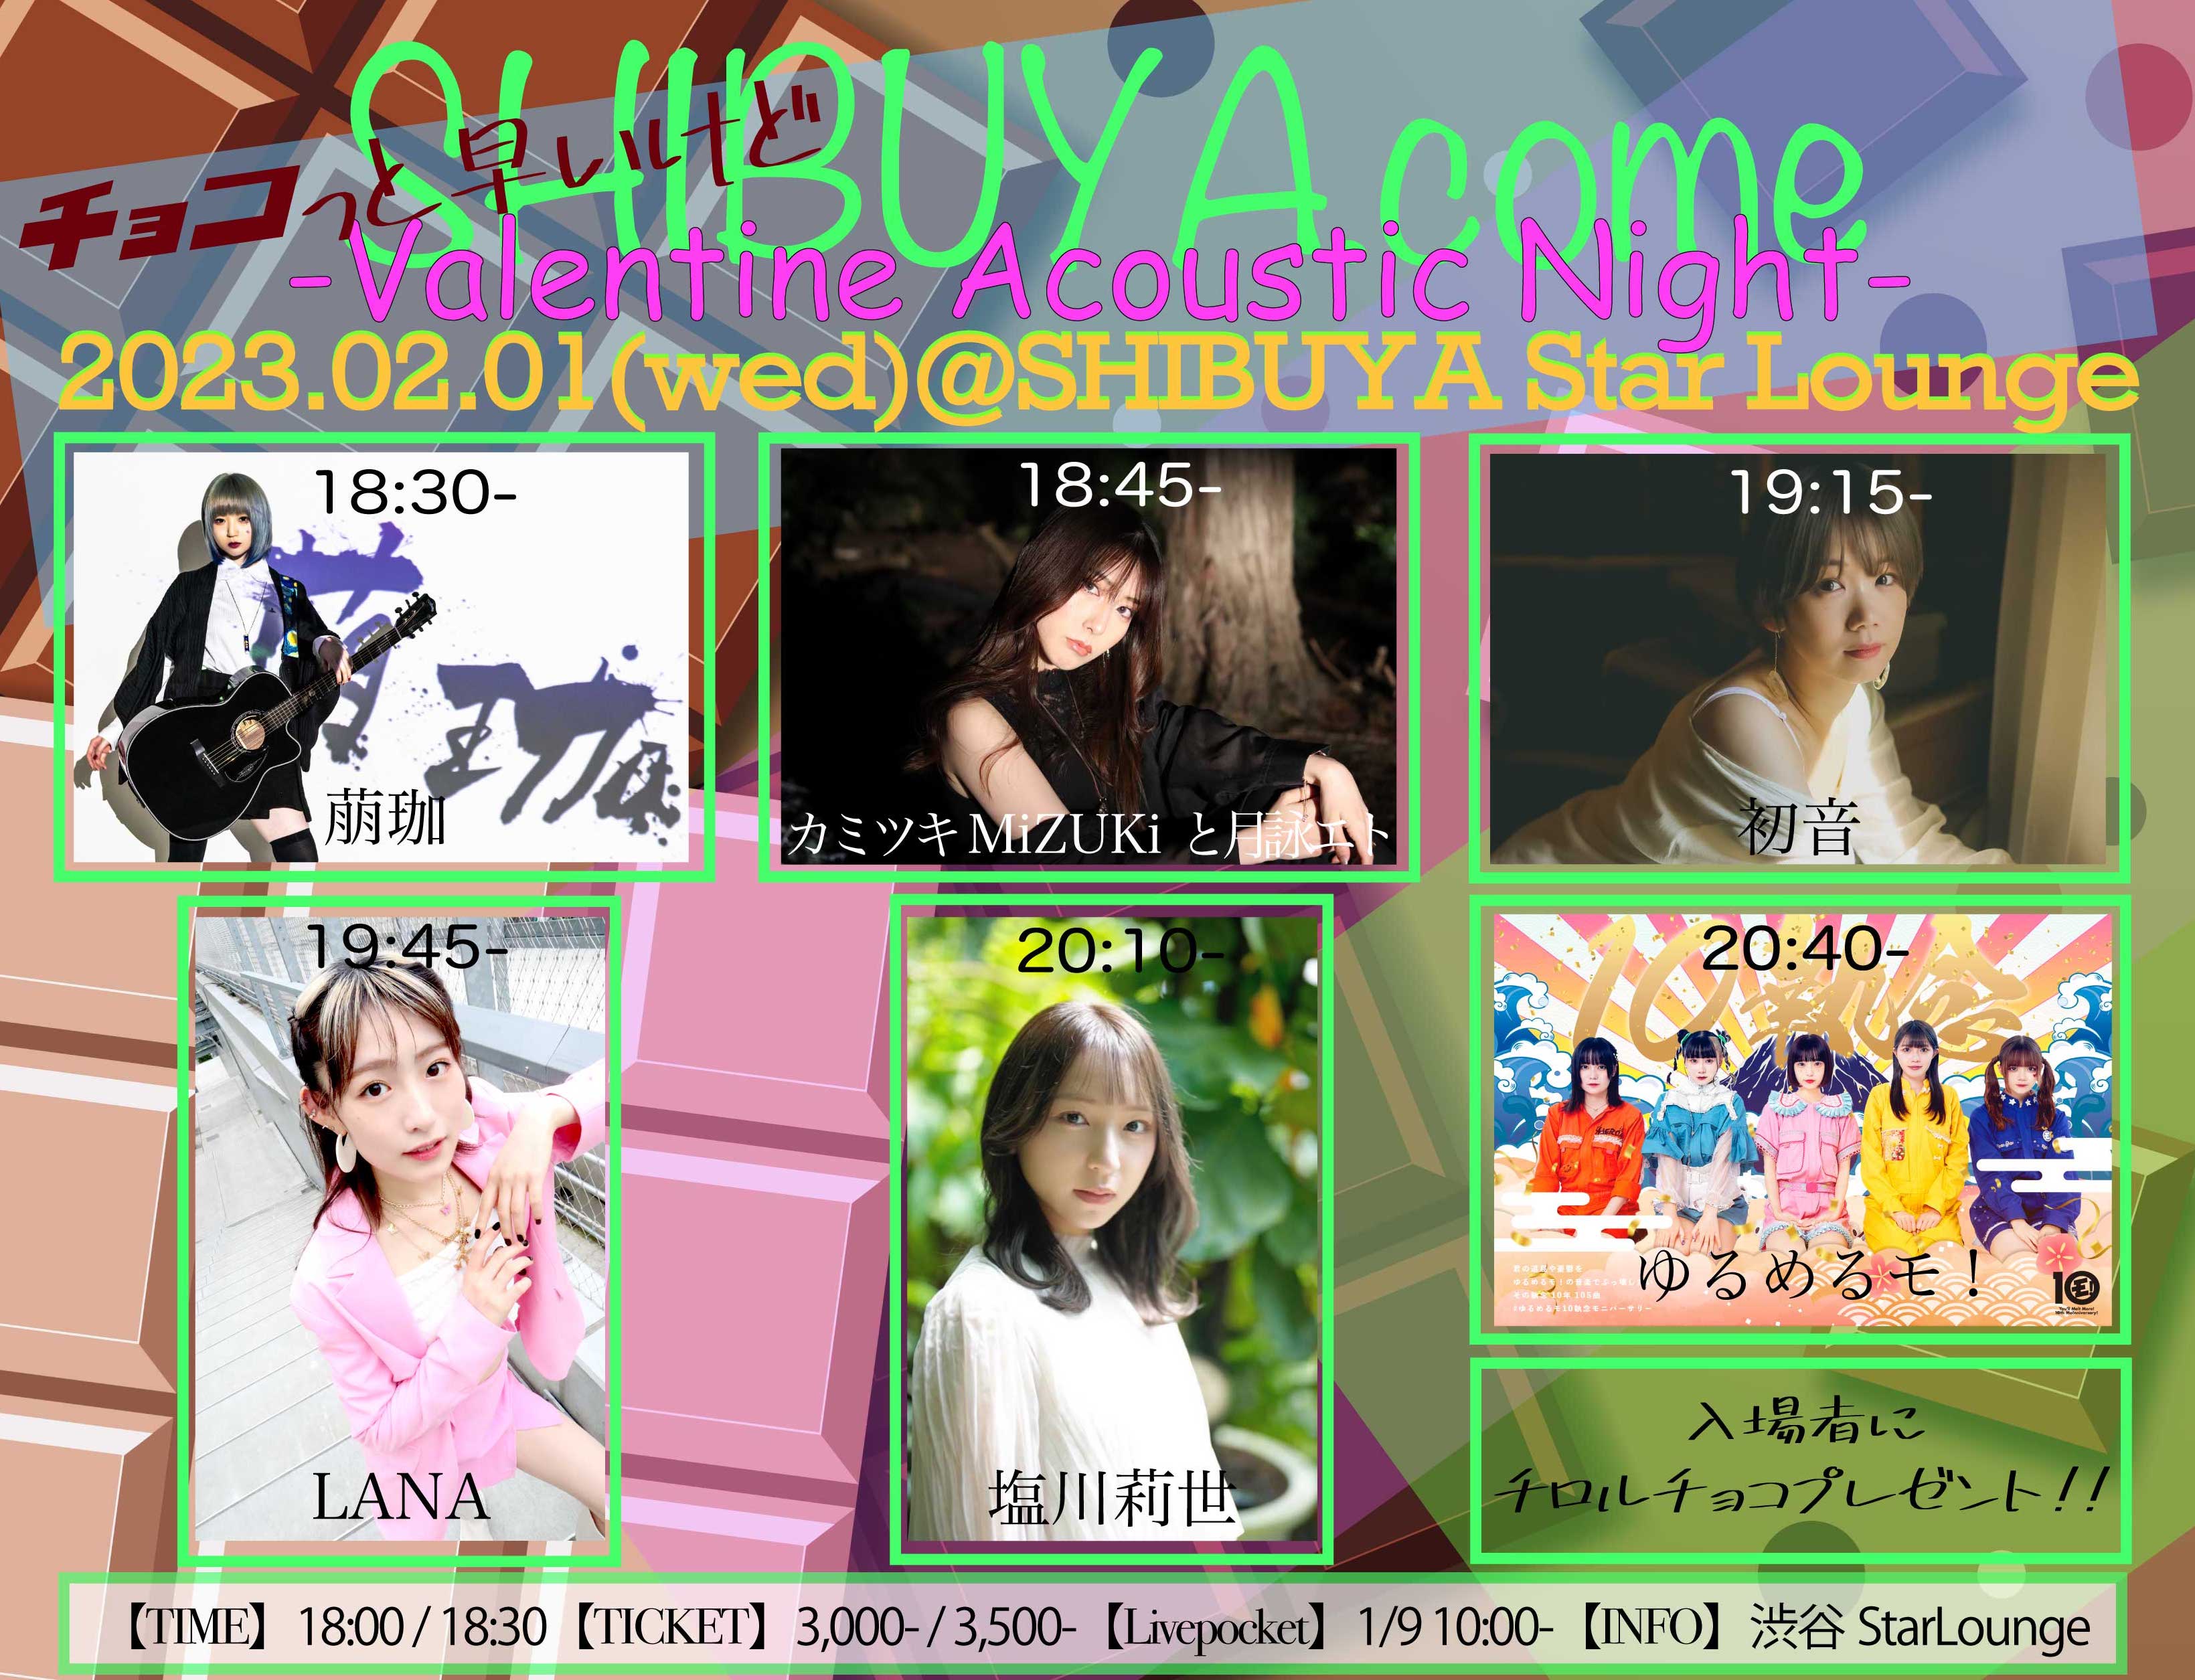 SHIBUYA.come -Valentine Acoustic Night-